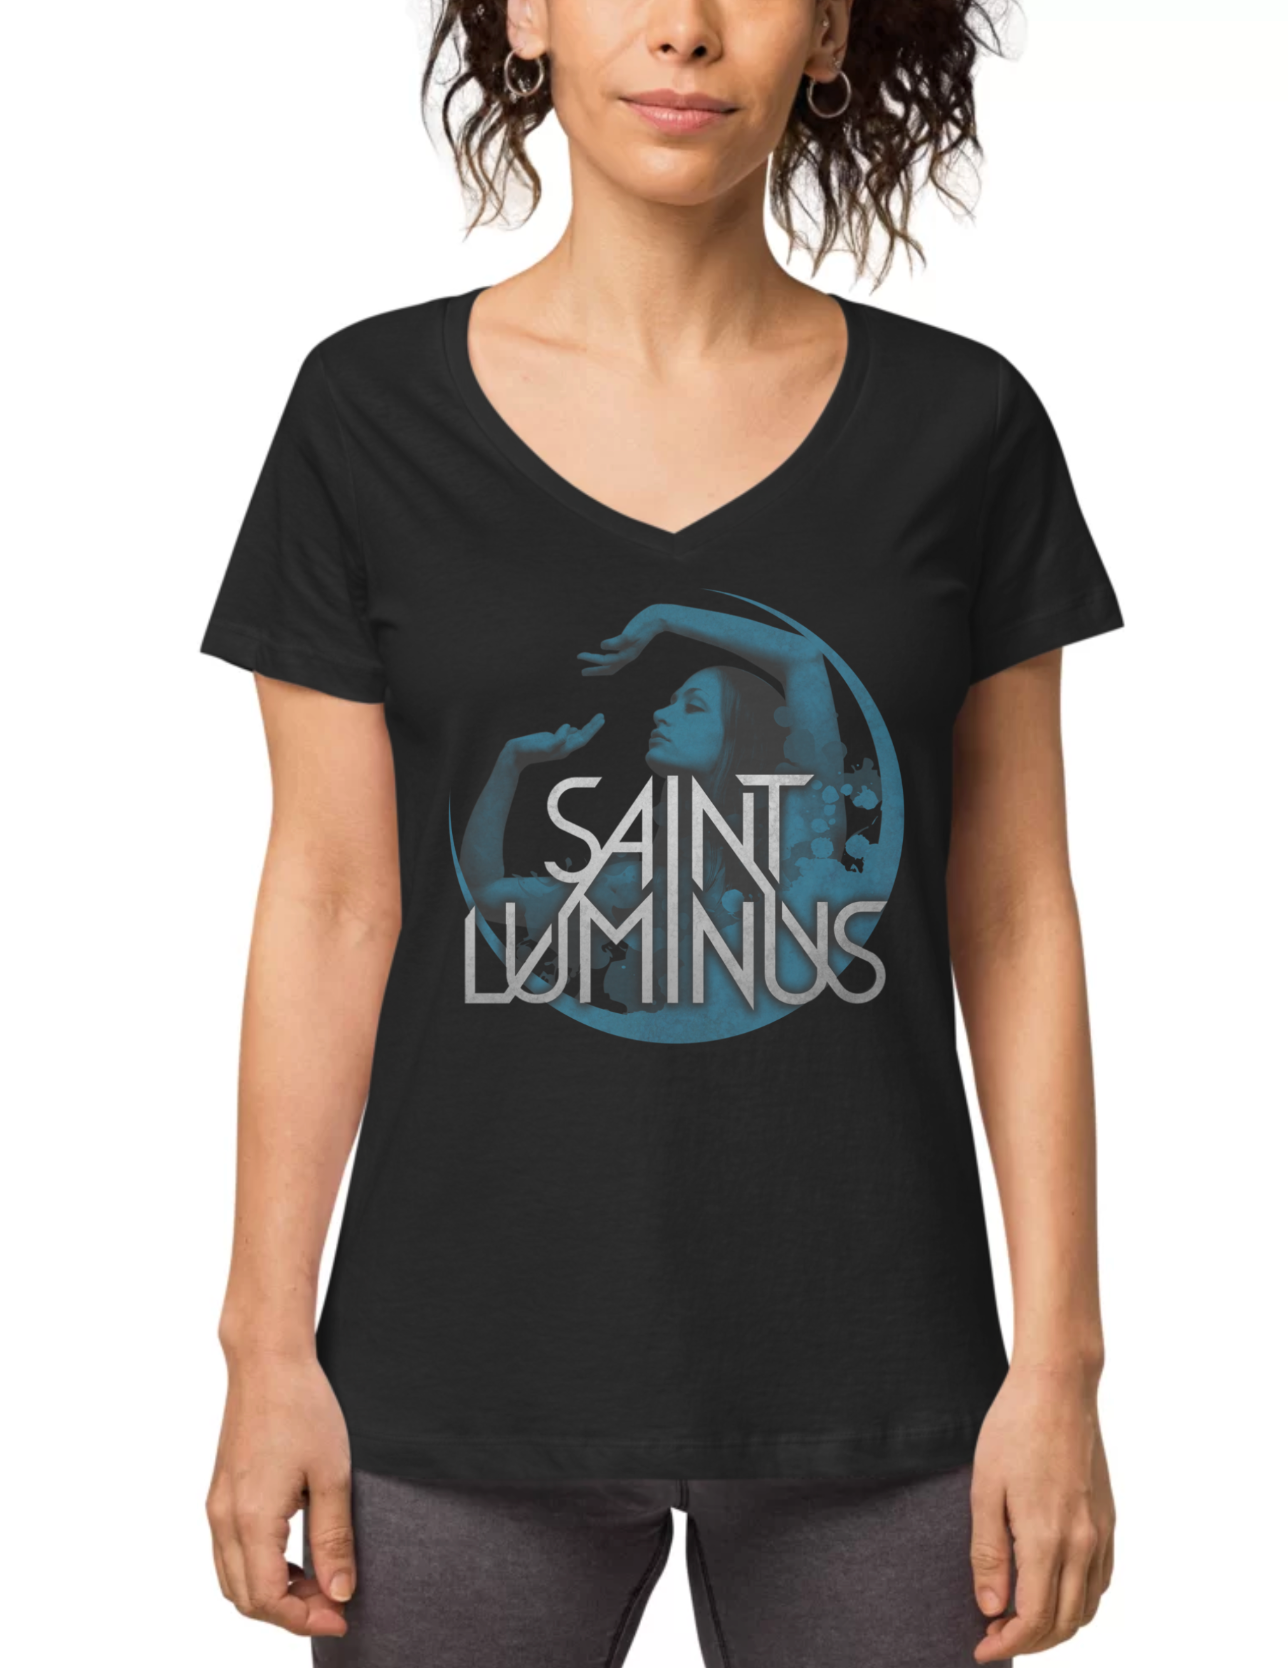 The Original Saint Luminus Shirt - Women's Fit